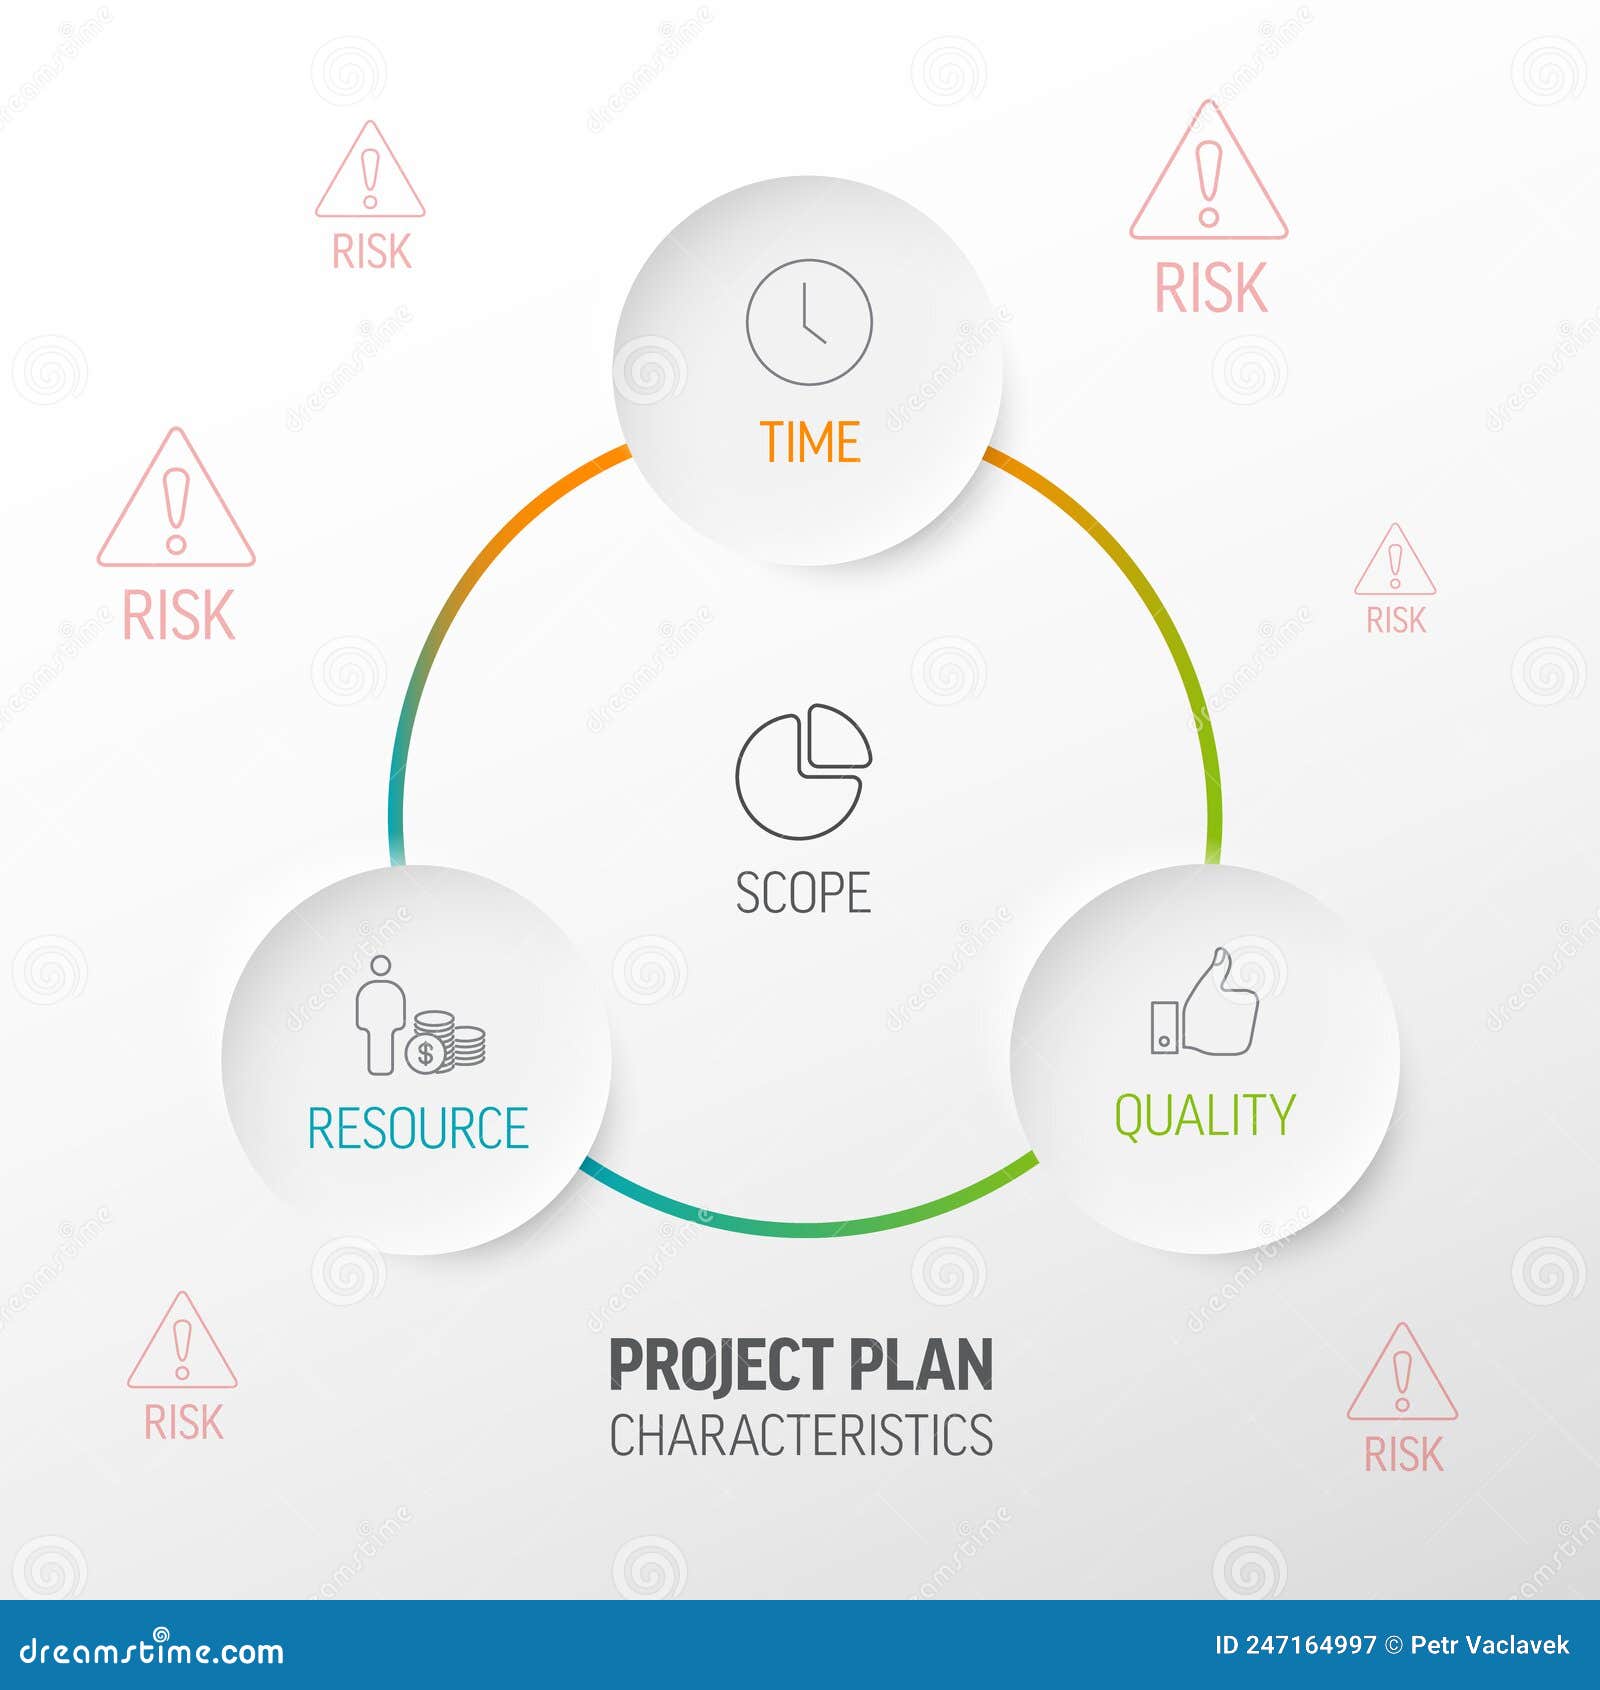 Characteristics of Project Plans - Diagram Schema Stock Vector ...